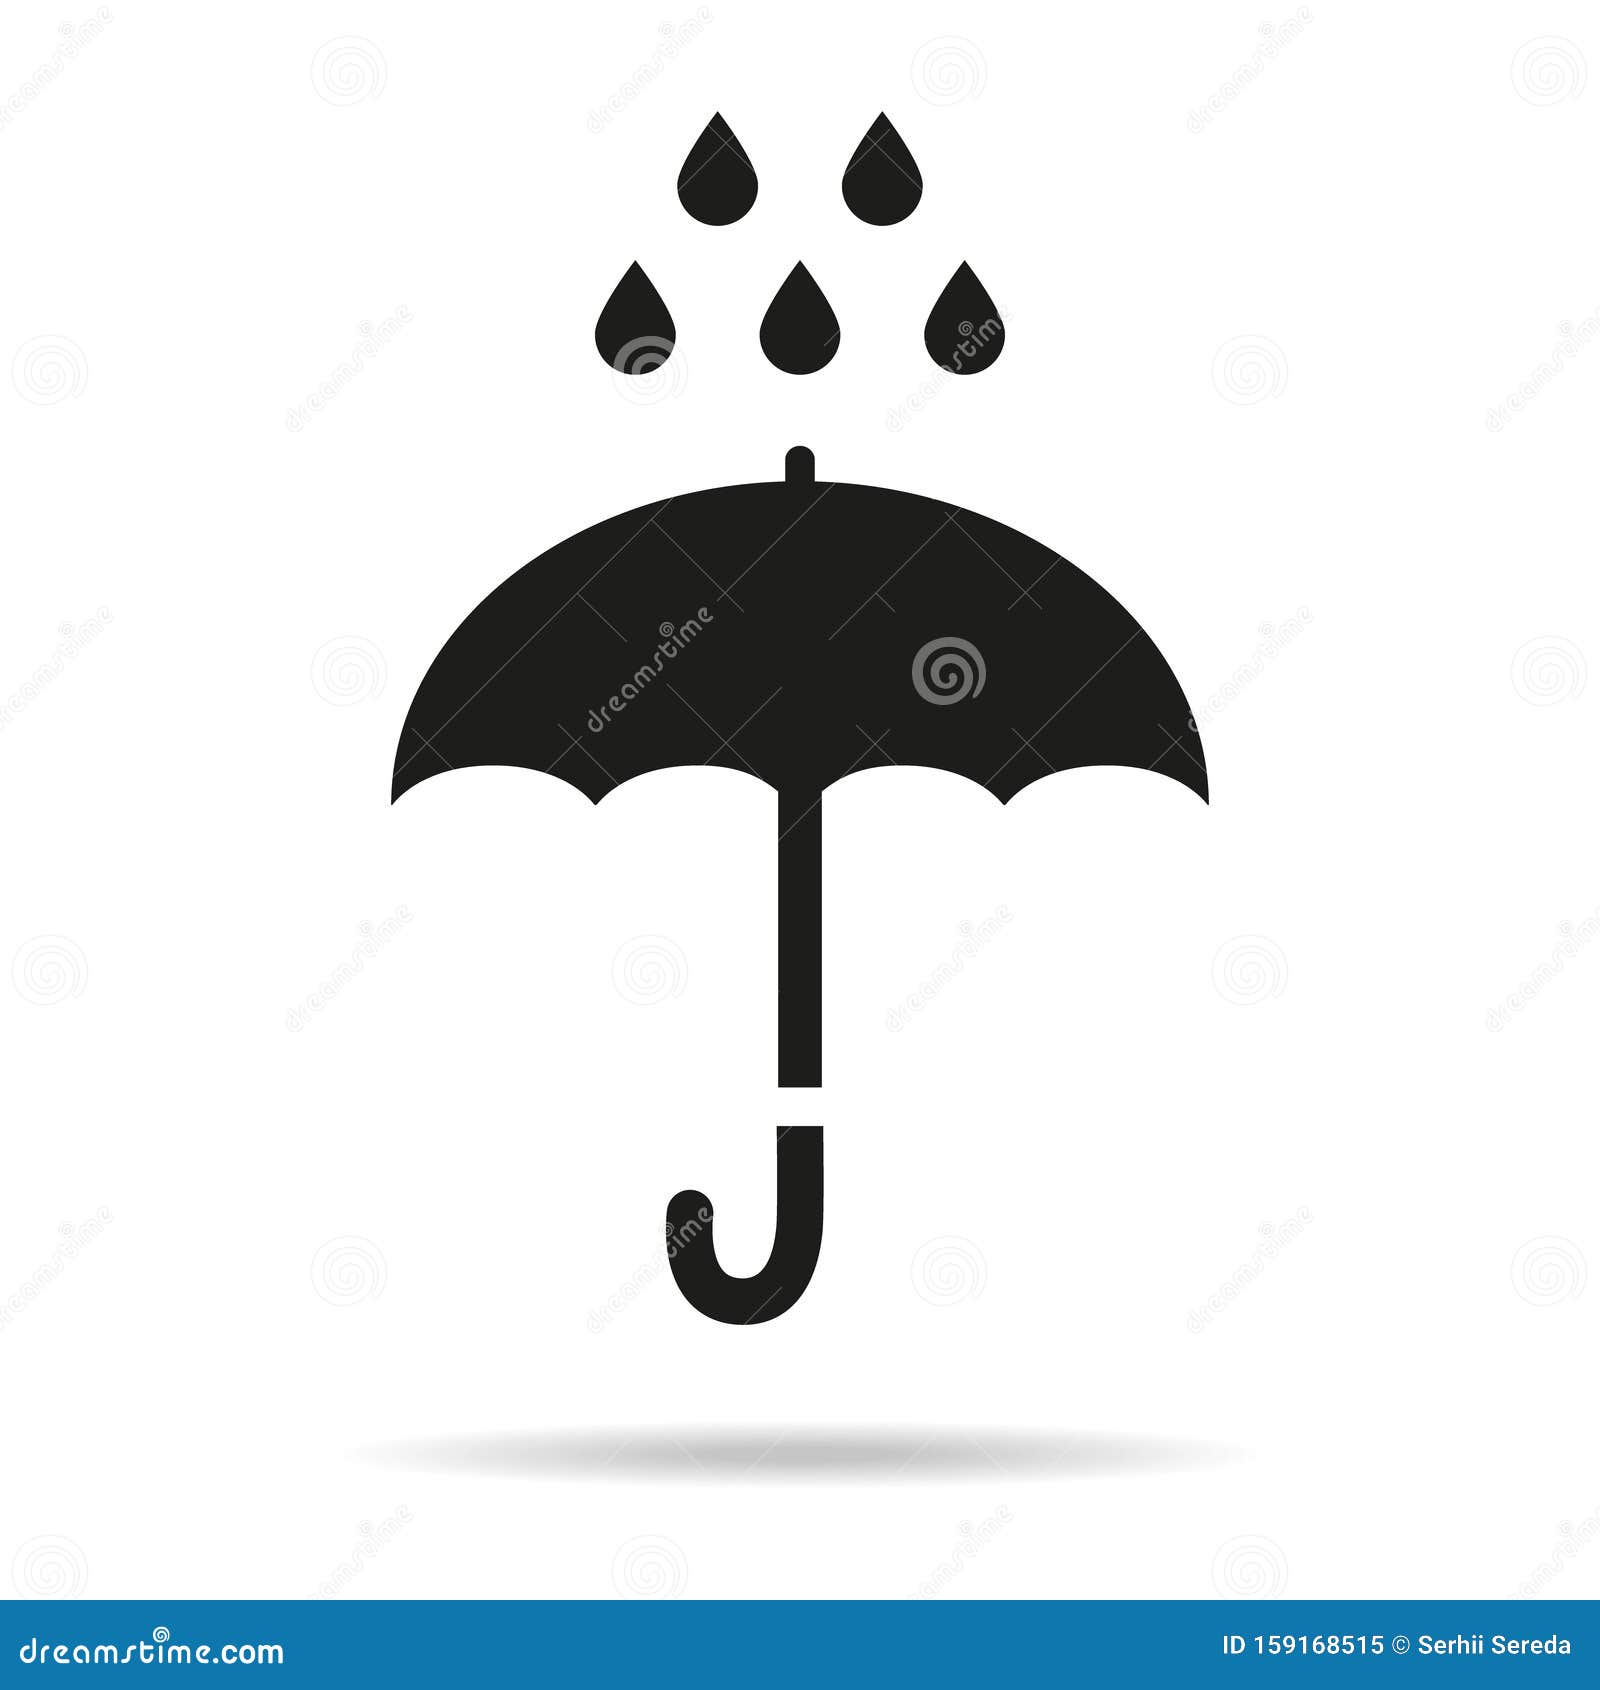 Значит зонтик. Знак зонт. Табличка зонтик. Этикетка для зонта. Знак зонтик с капельками.